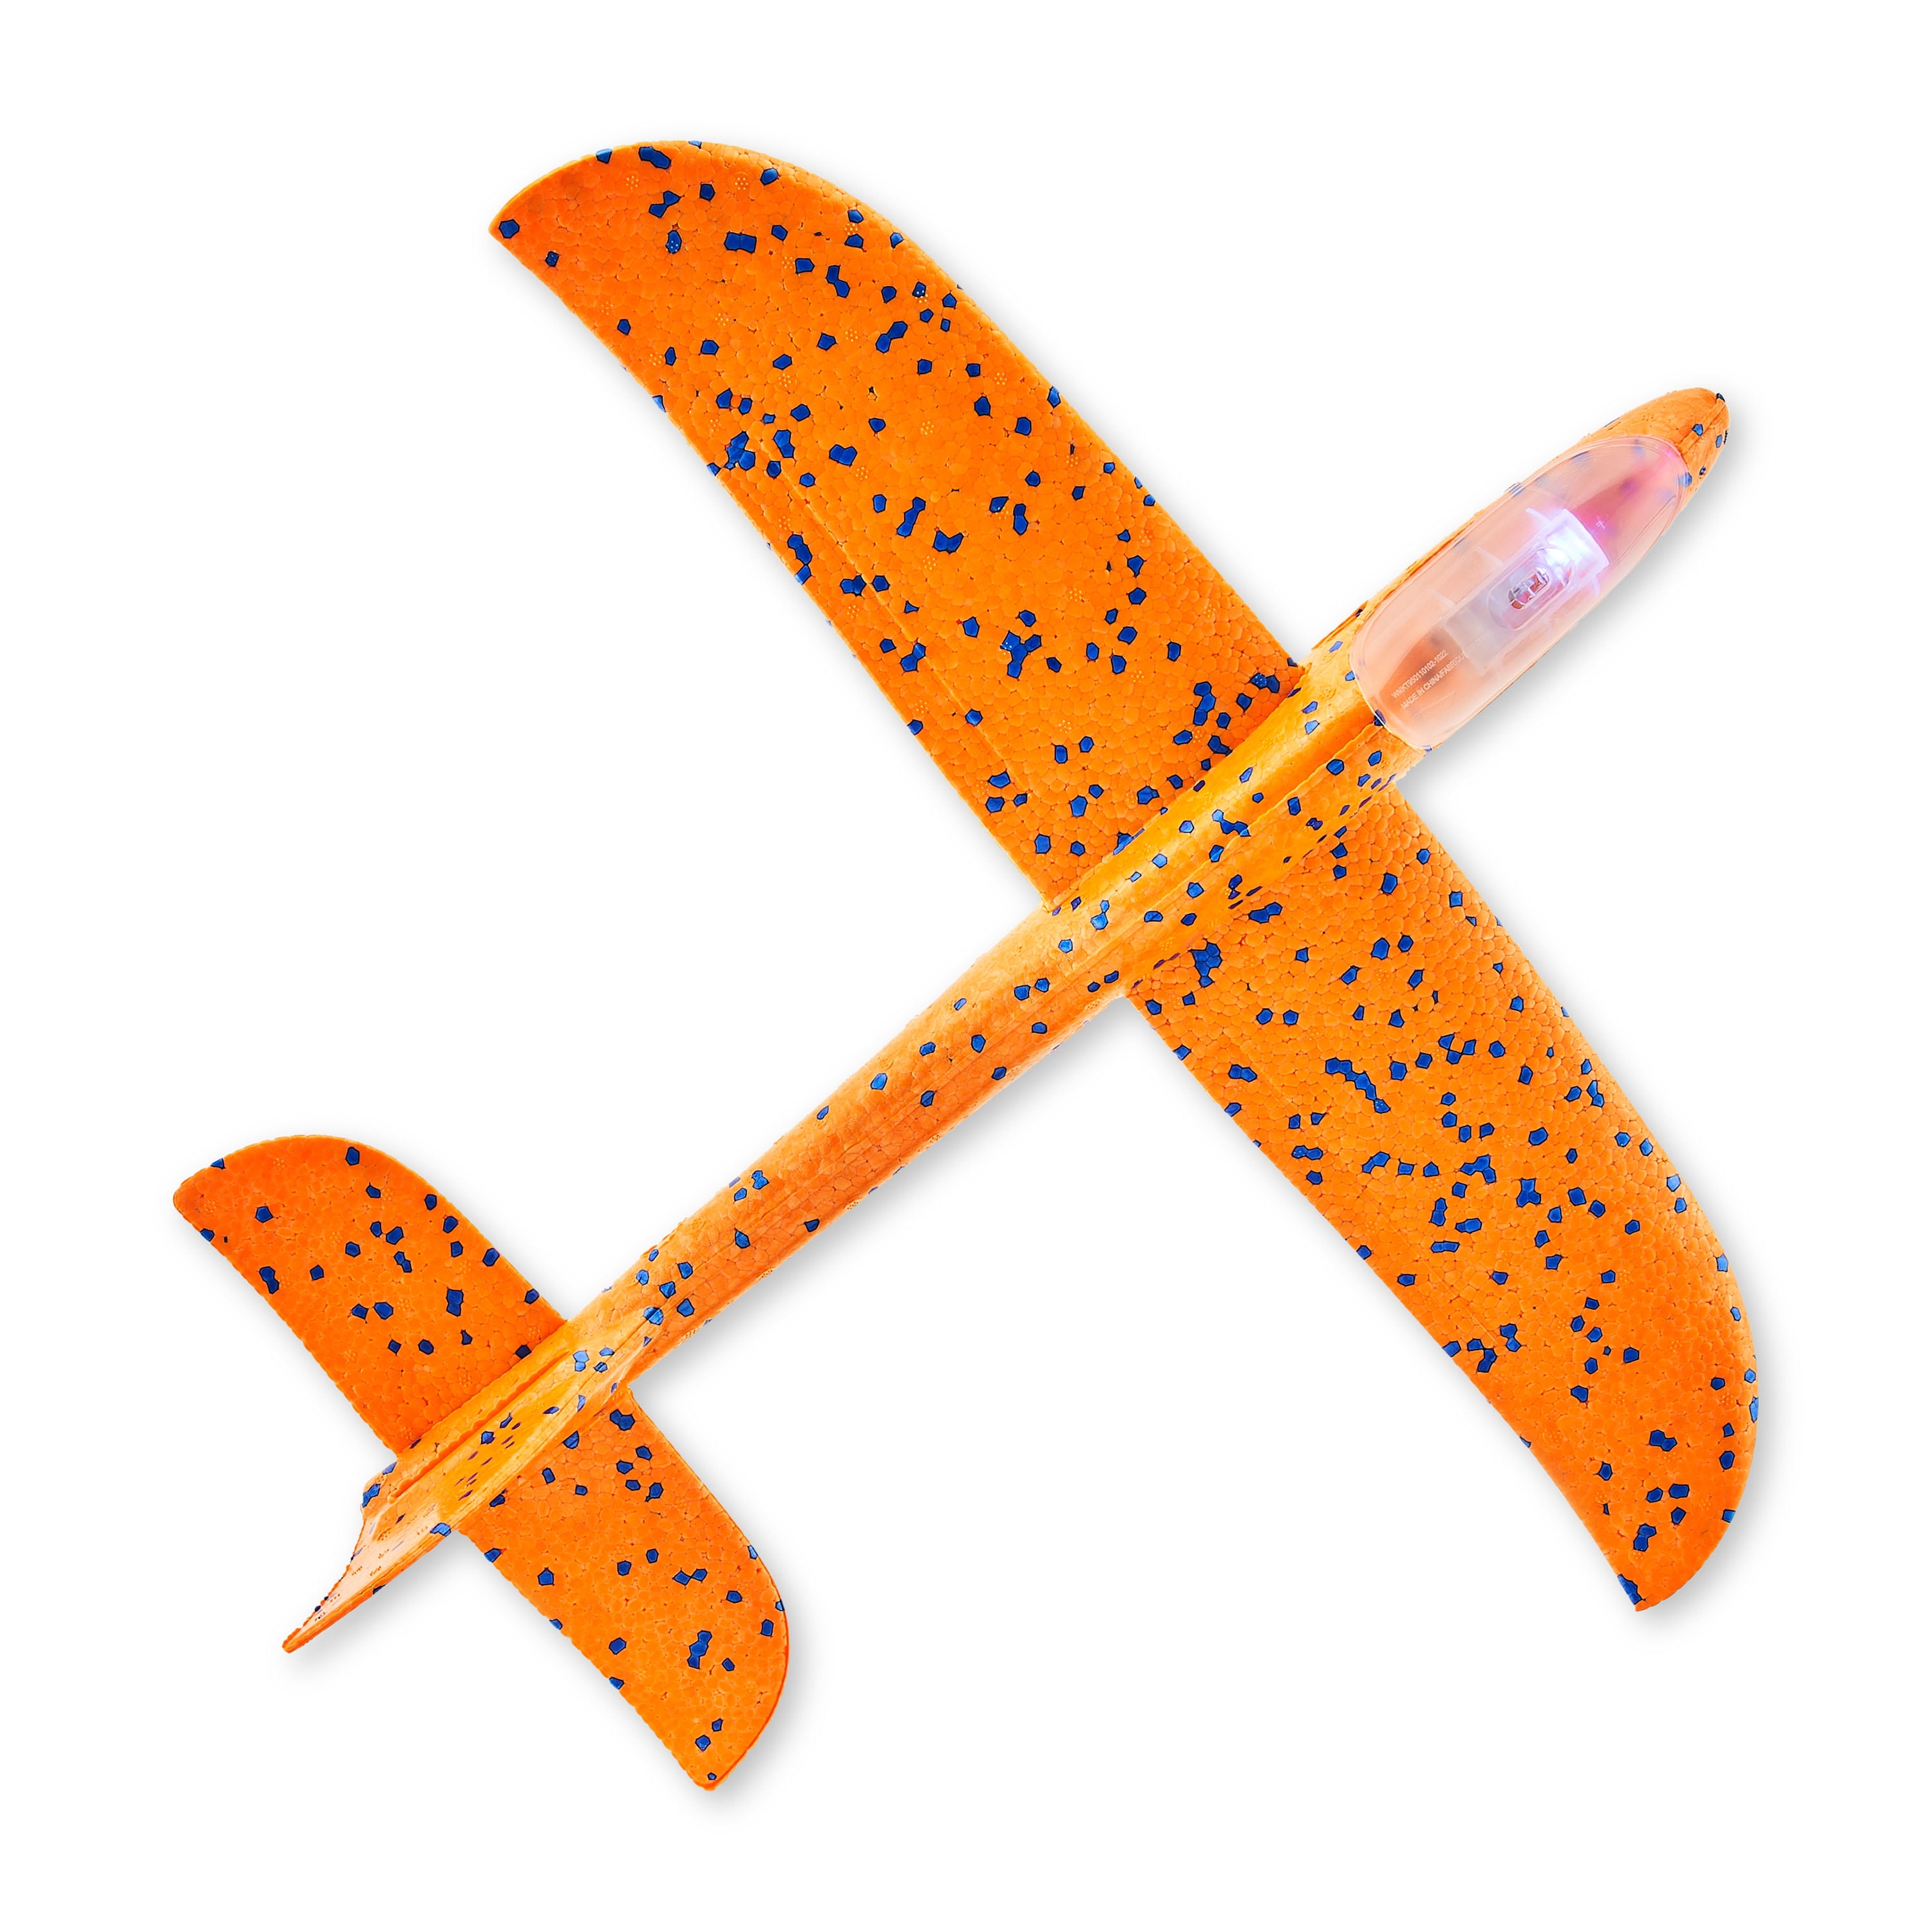 WayToCelebrate Easter Orange Light Up Glider Plane